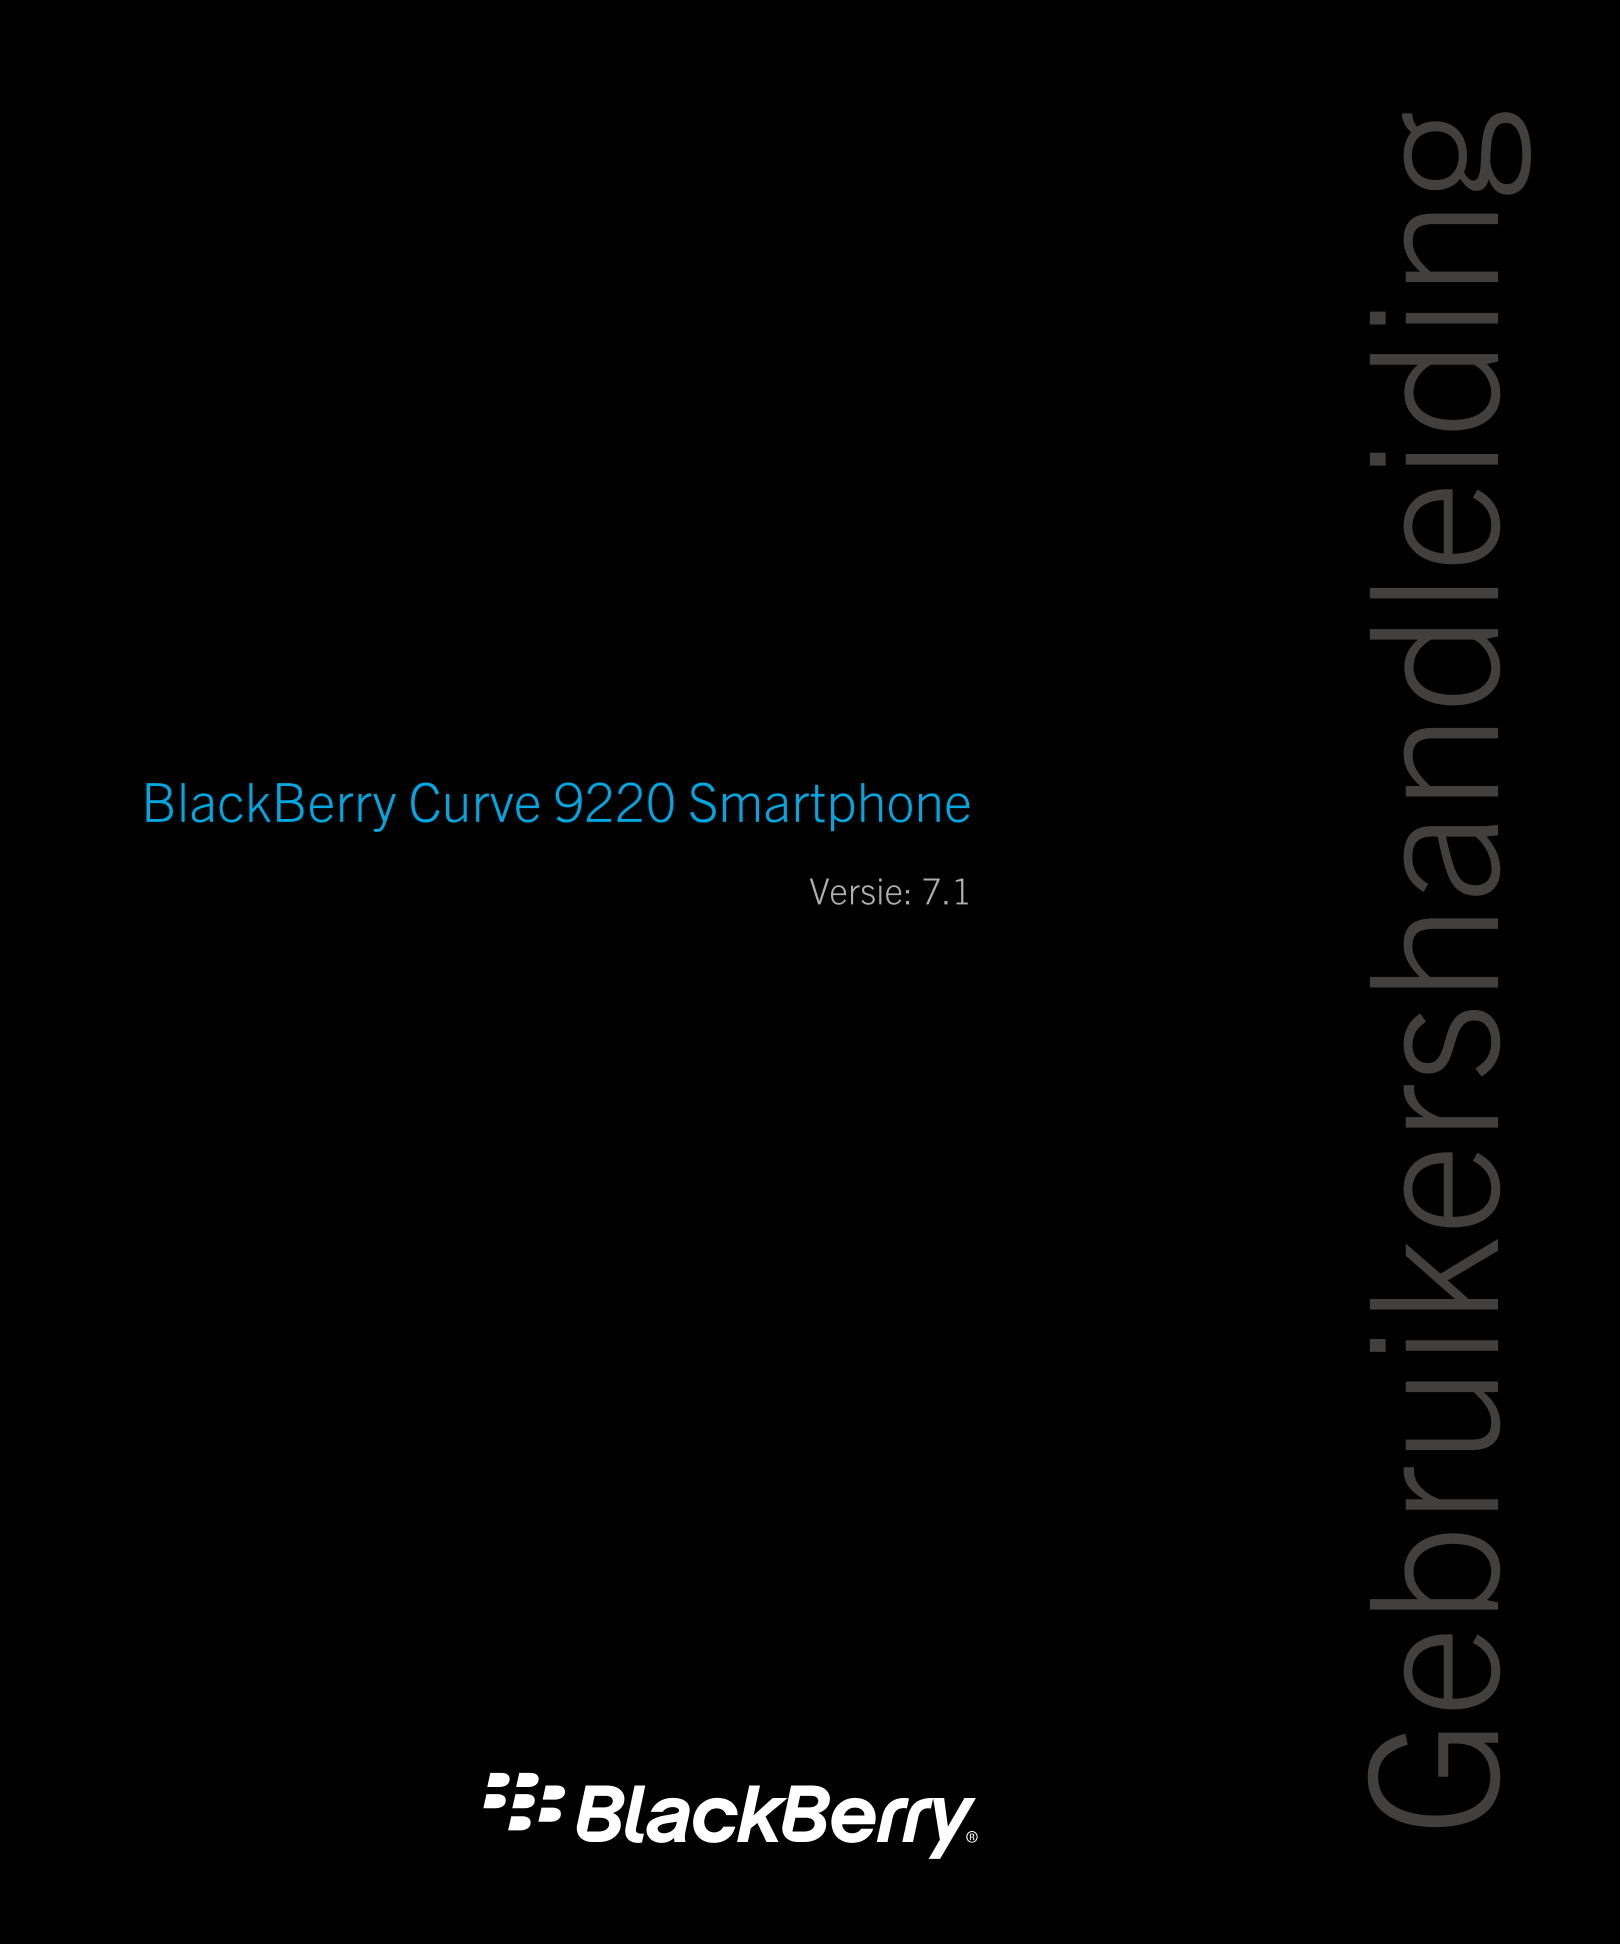 Gebruikershandleiding
BlackBerry Curve 9220 Smartphone
Versie: 7.1